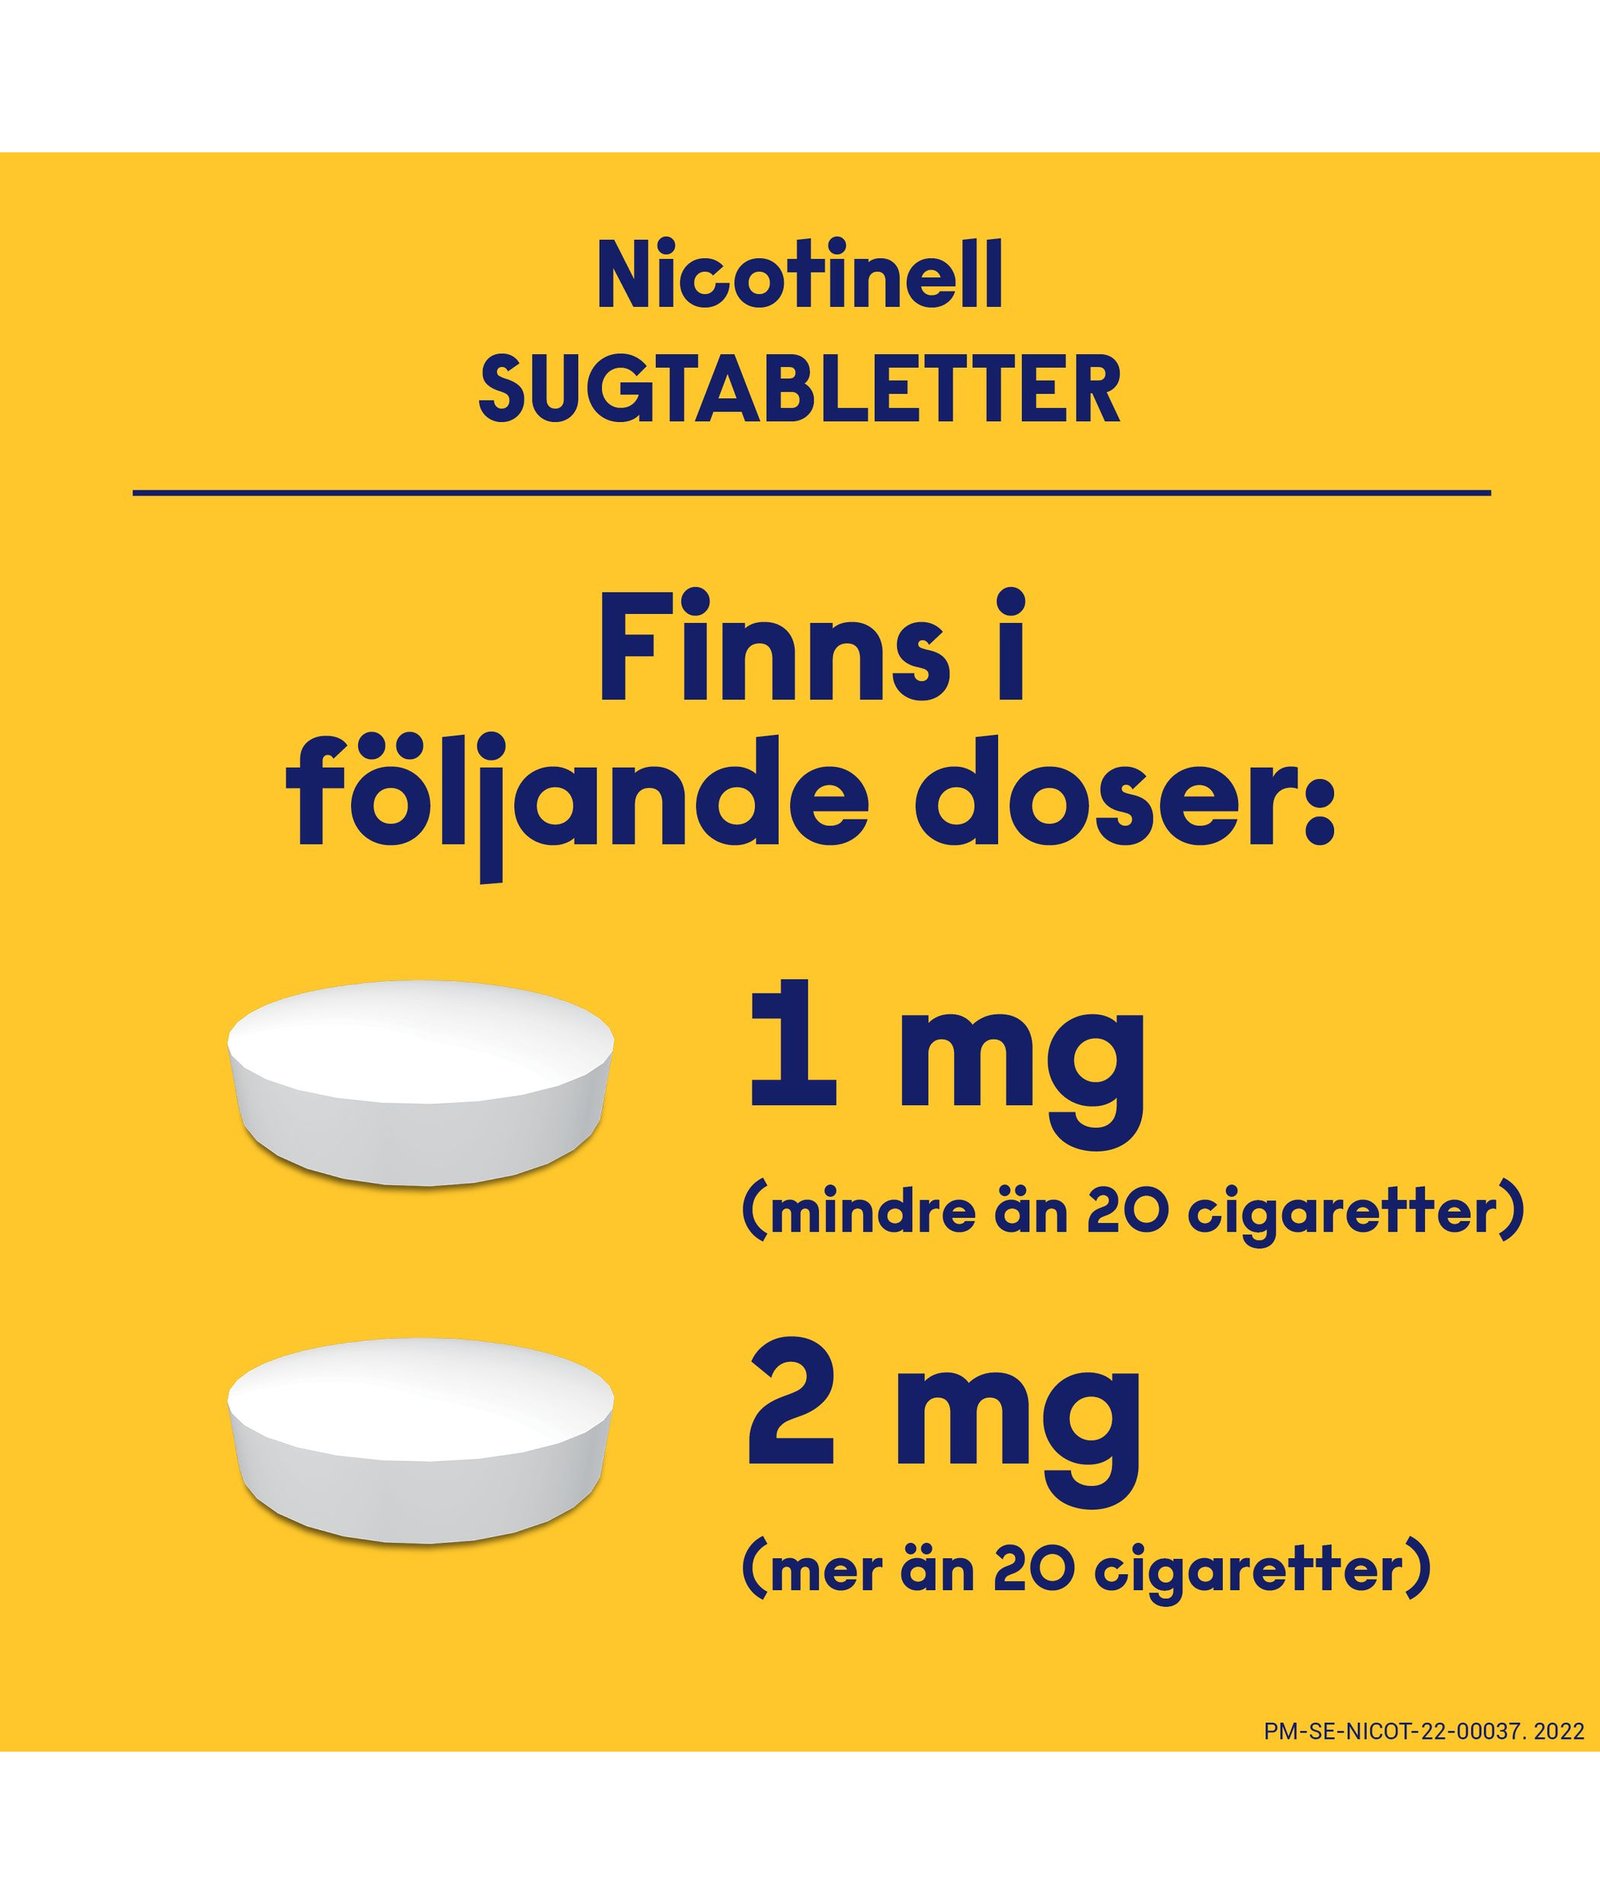 Nicotinell Mint 2 mg Nikotin Komprimerade Sugtabletter 204 st